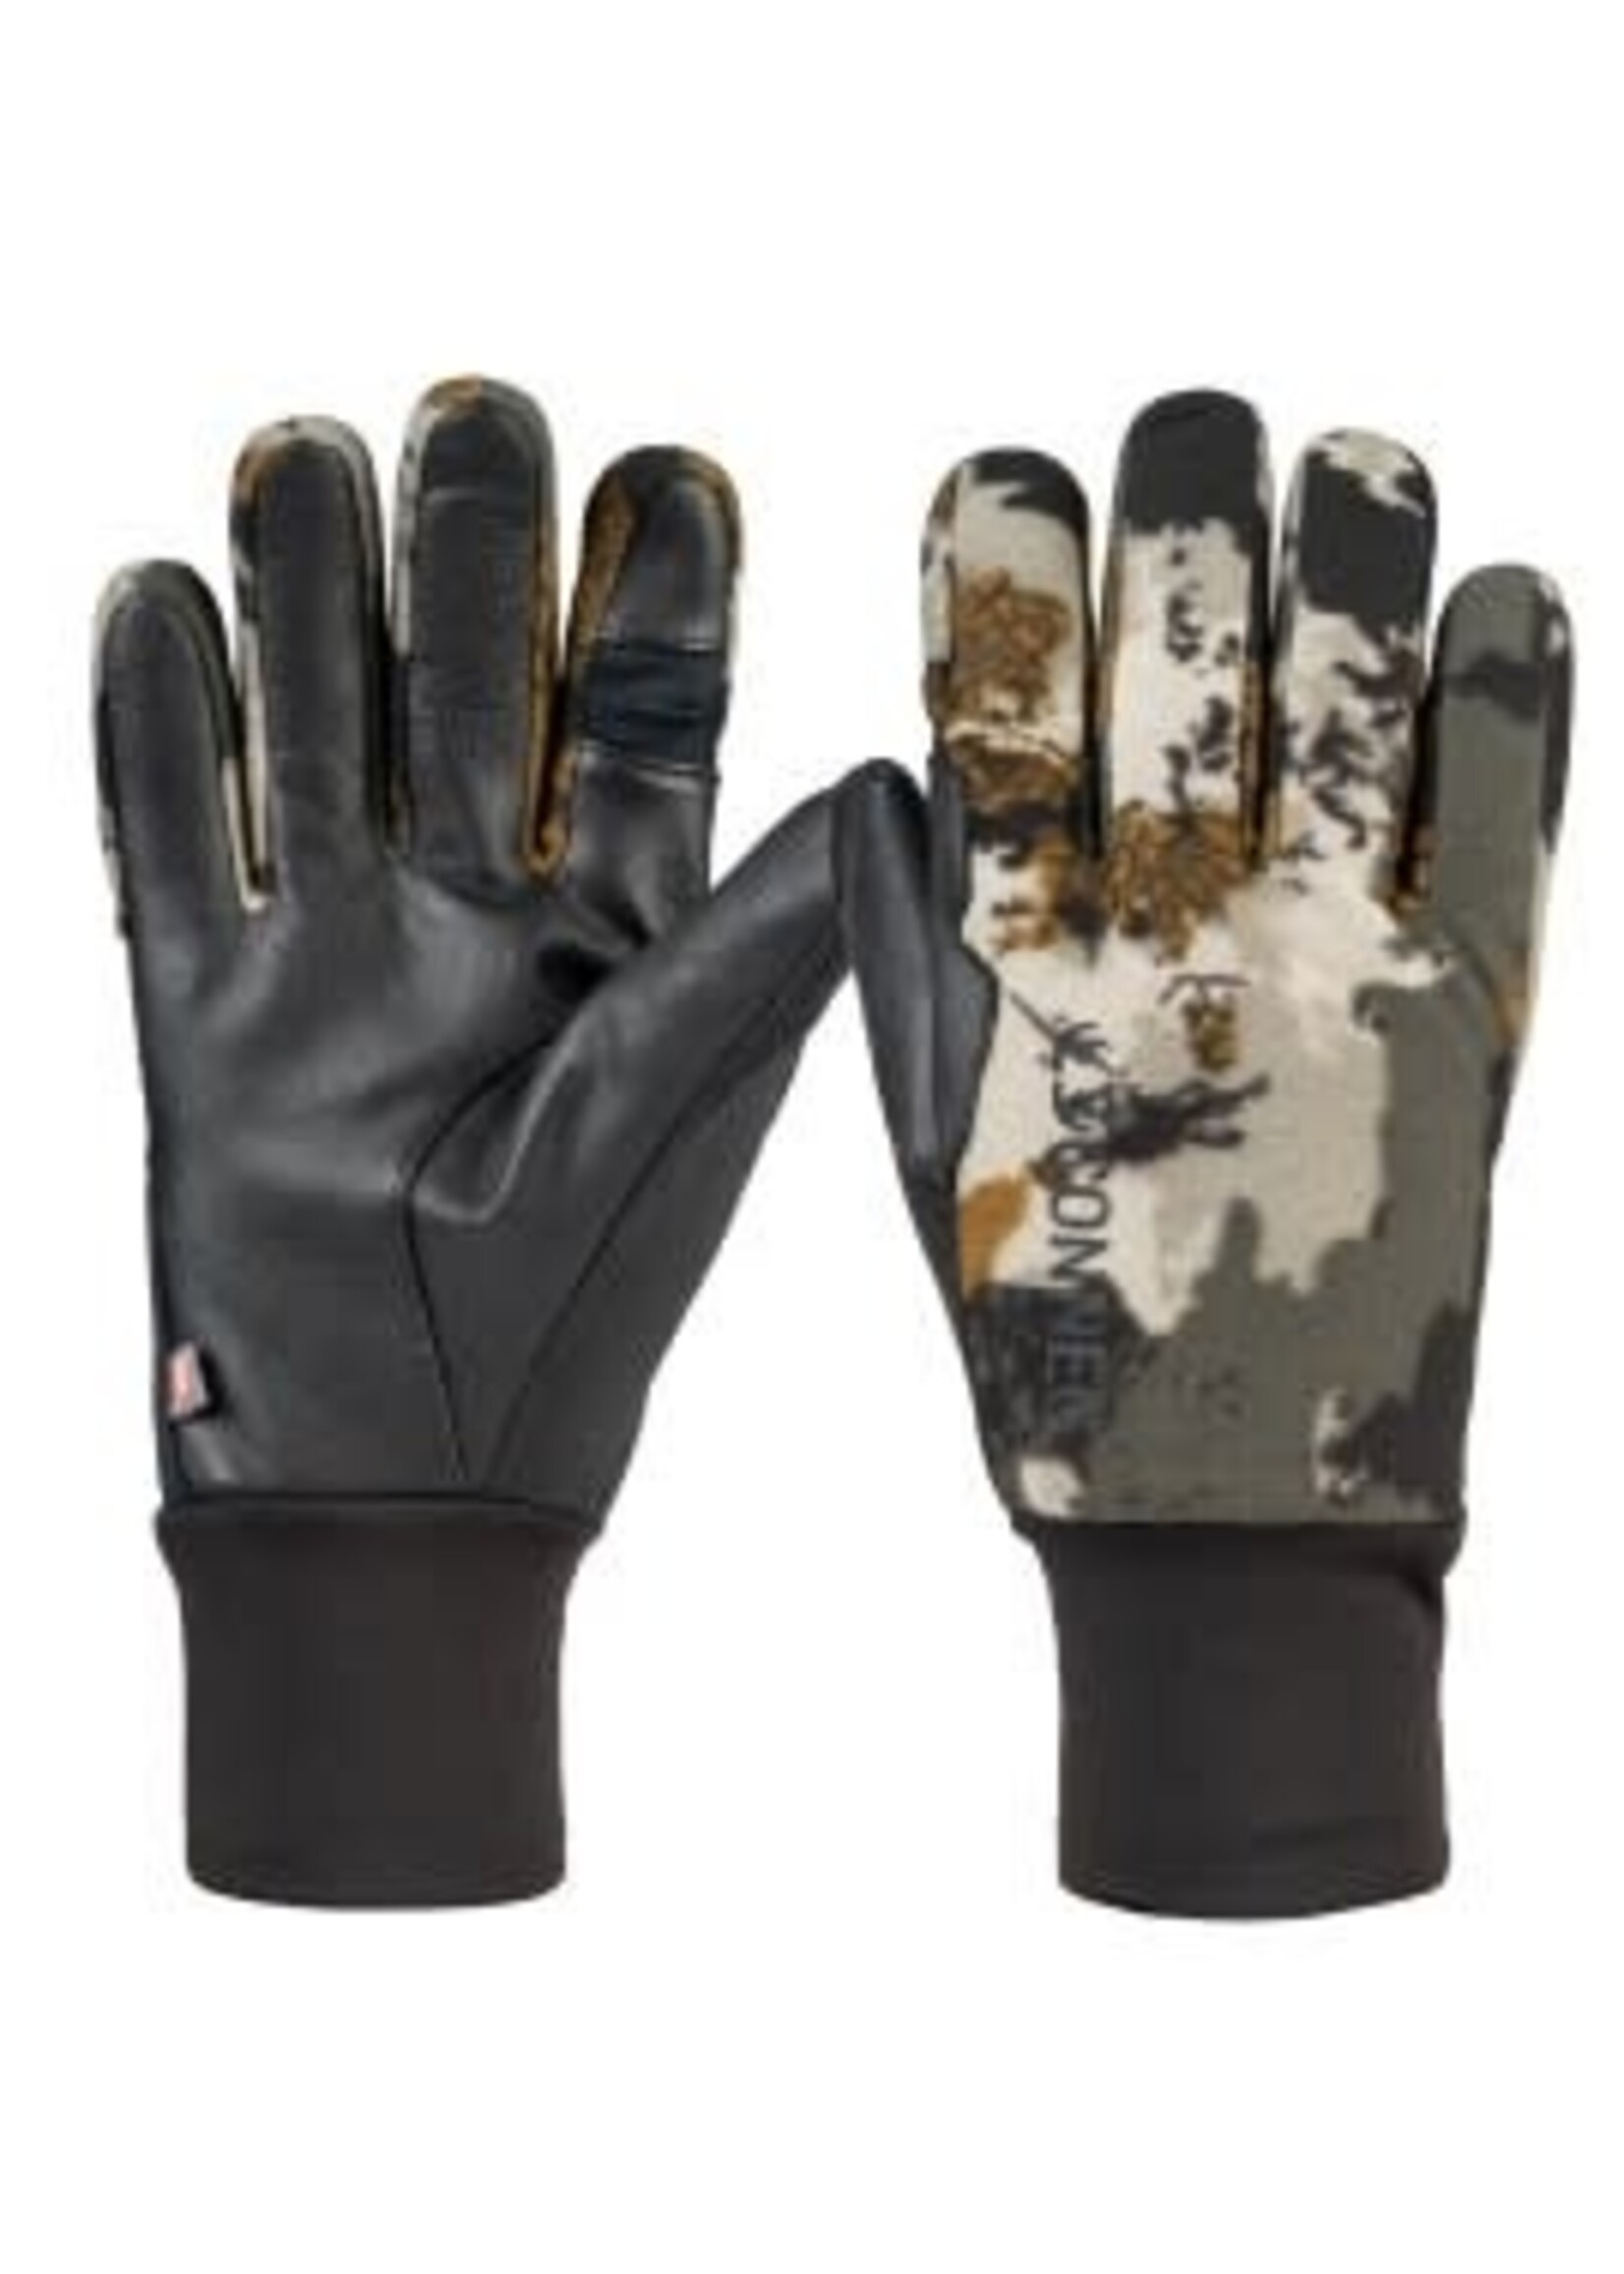 Connec Outdoor anticosti gloves